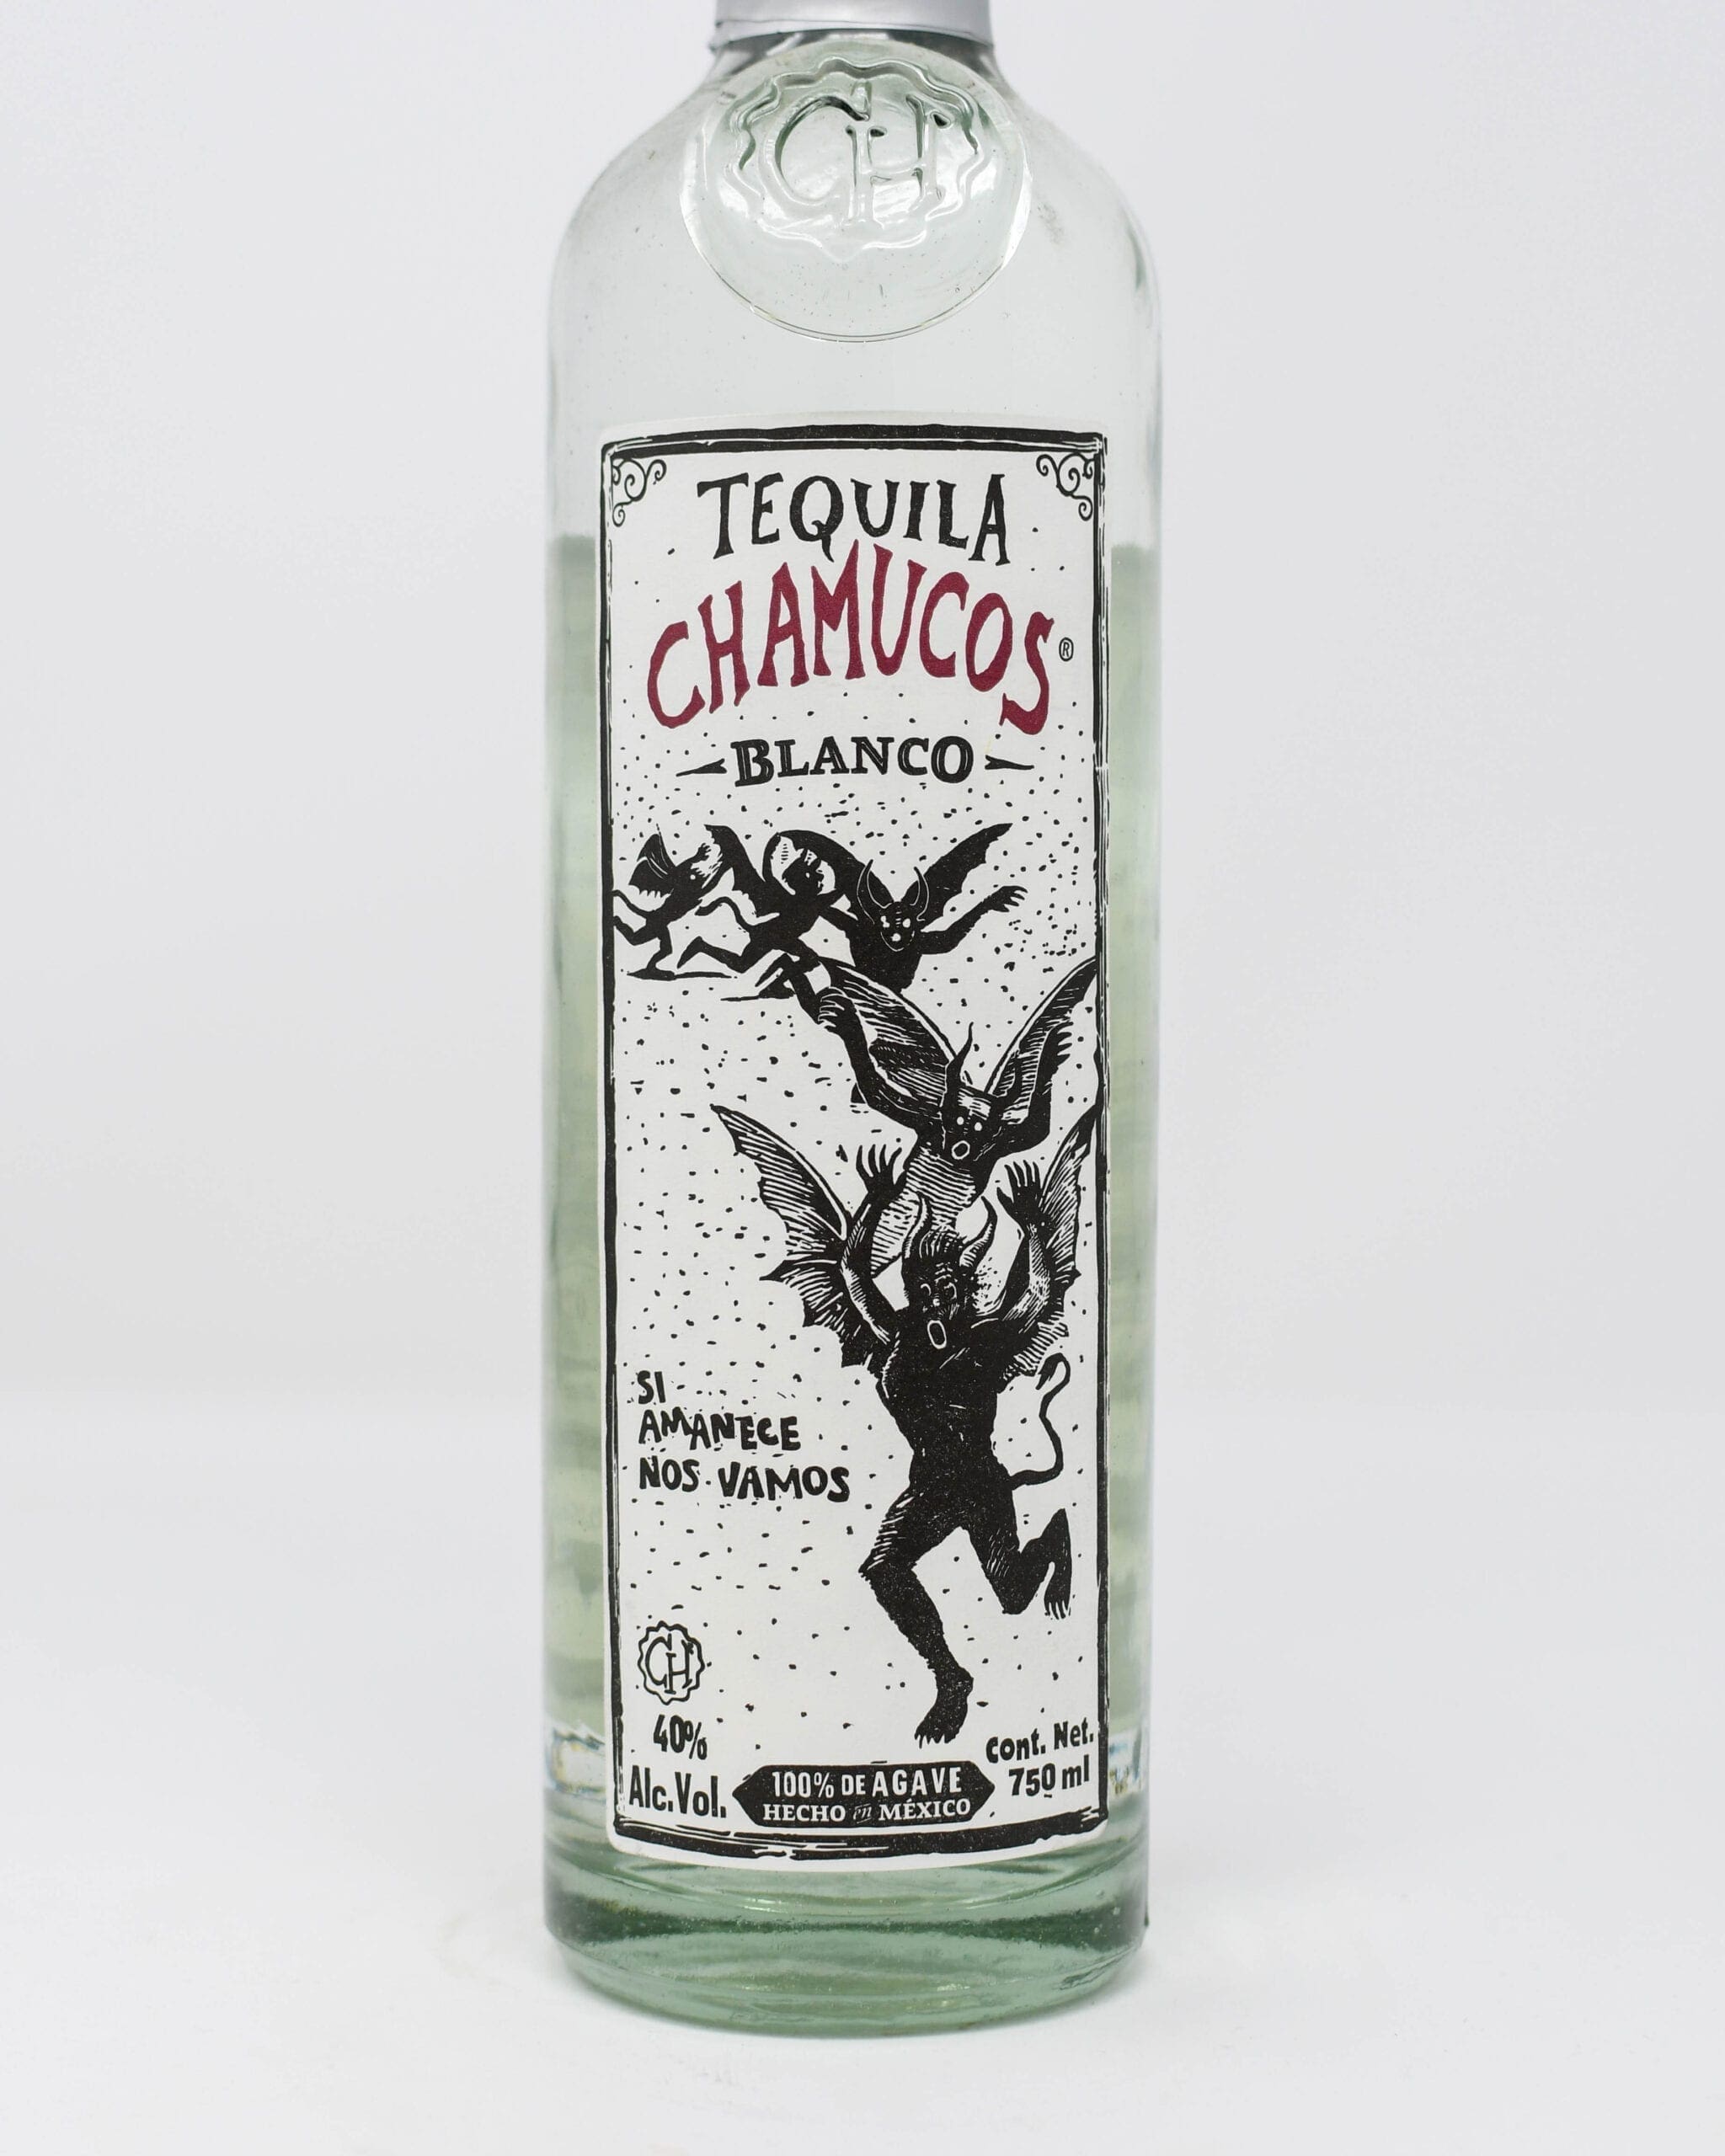 Tequila Chamucos Blanco